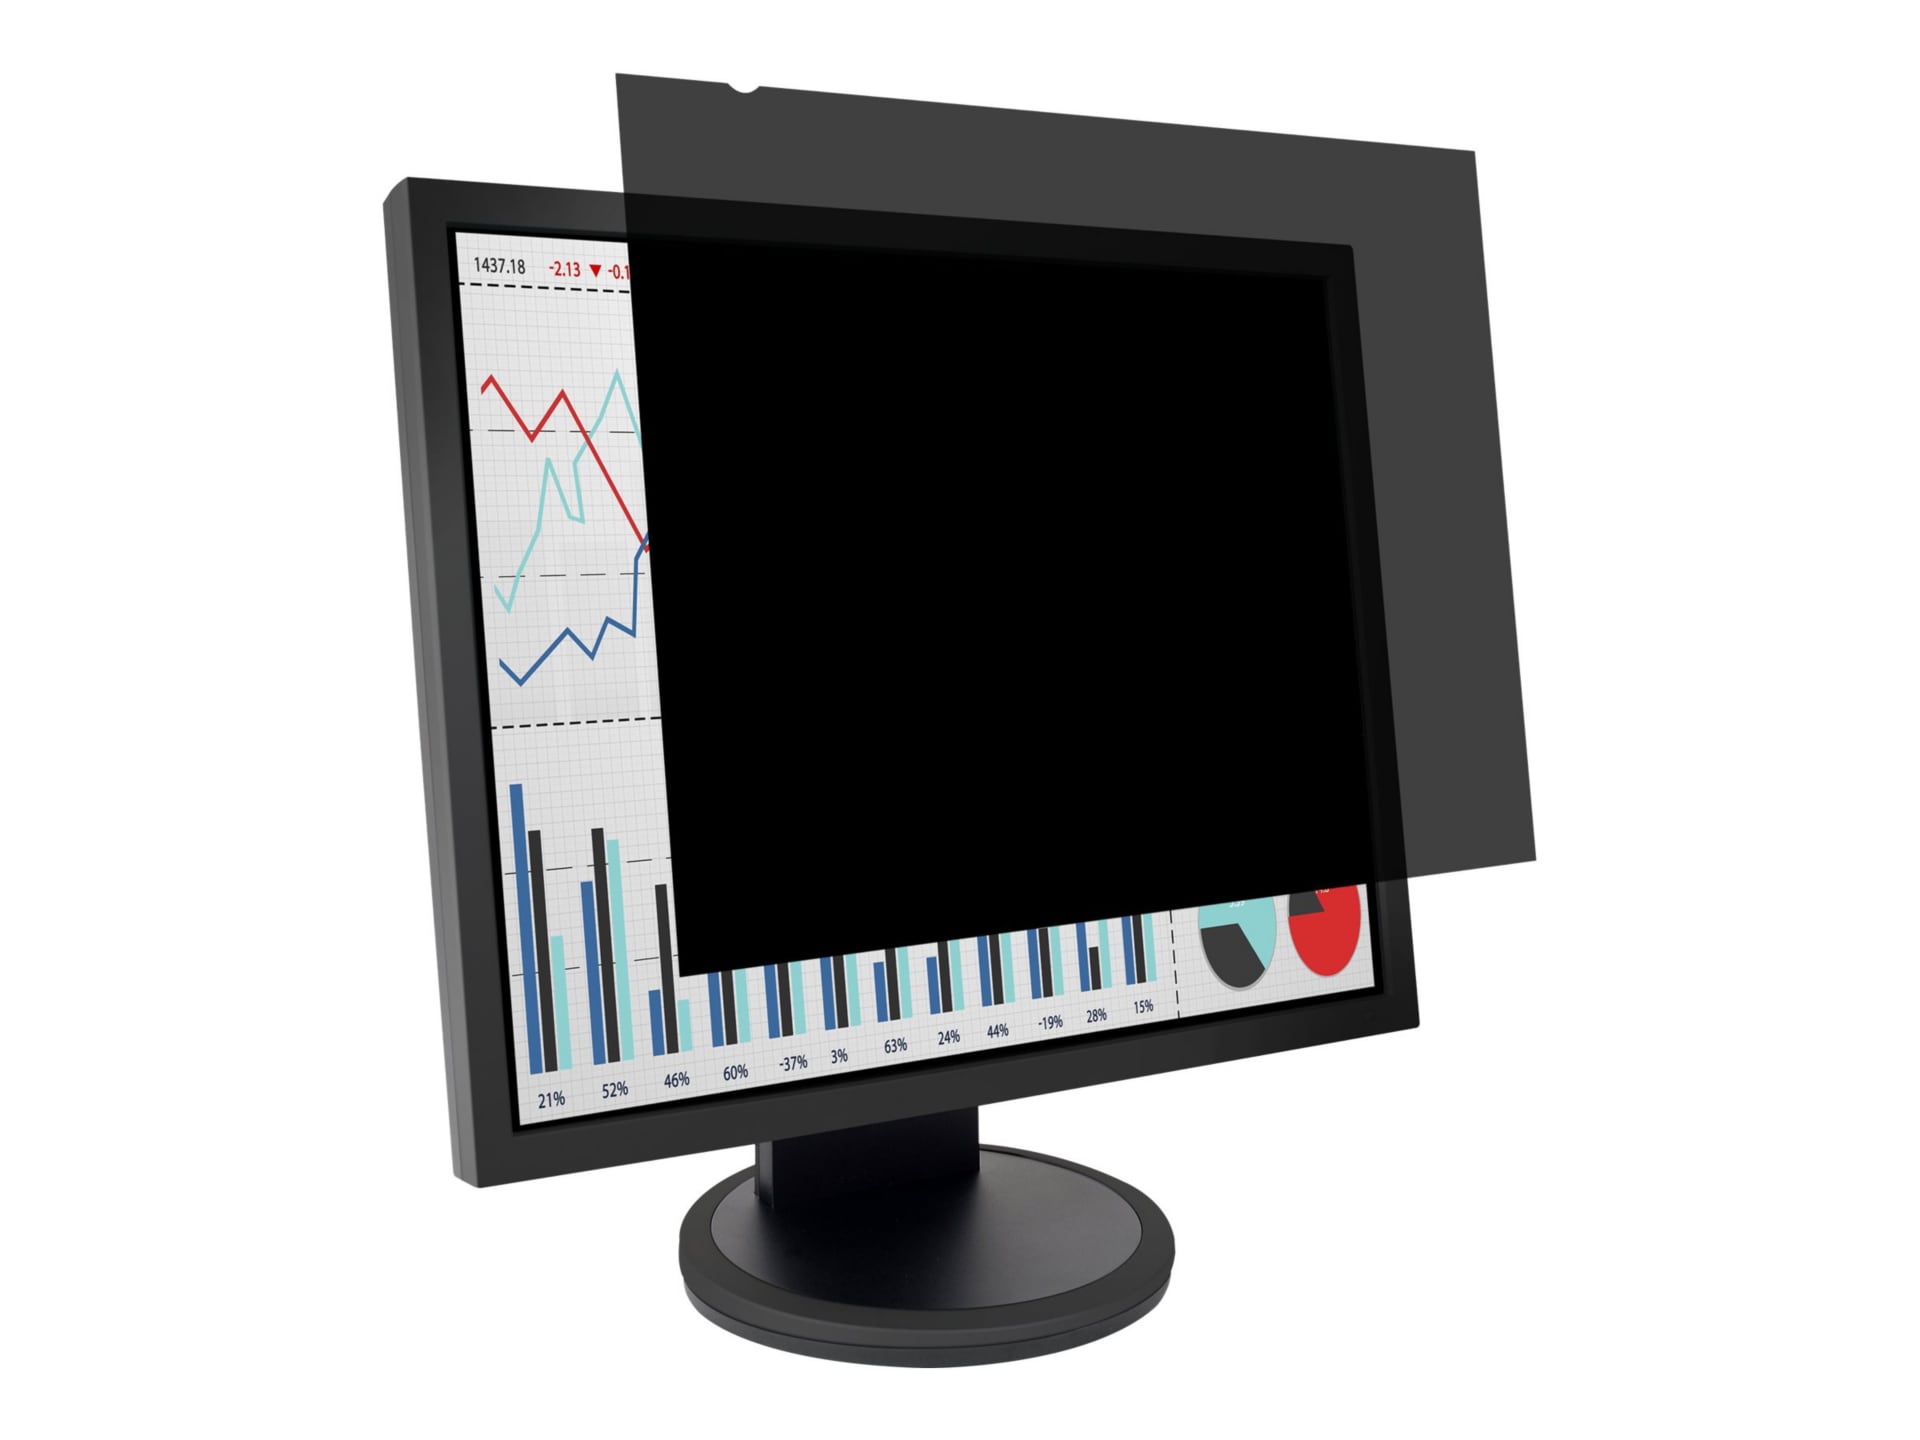 Kensington FP190 Monitors Privacy Screen 19" (5:4) - display screen protector - 19"